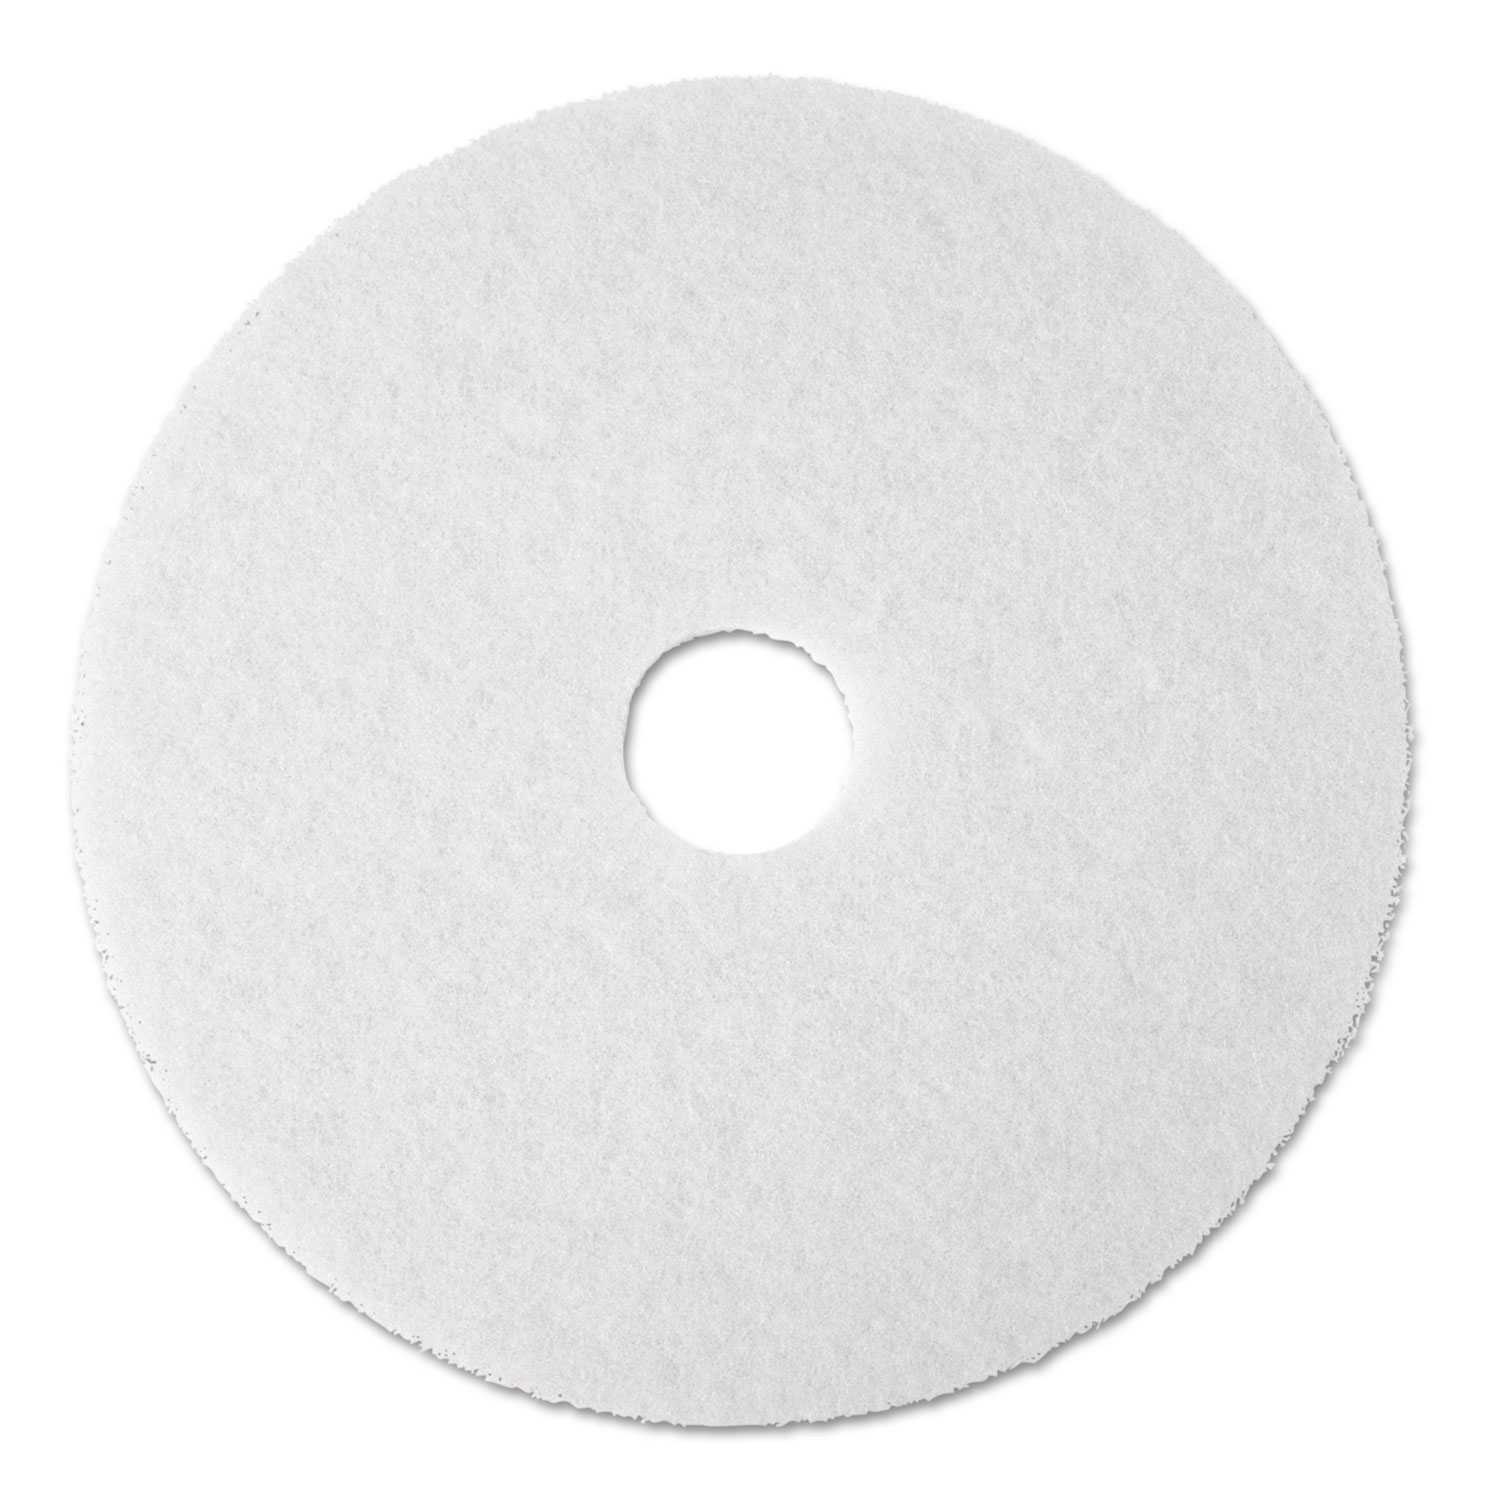  3M 4100 Super Polish Floor Pad 4100, 13 Diameter, White, 5/Carton (MMM08477) 